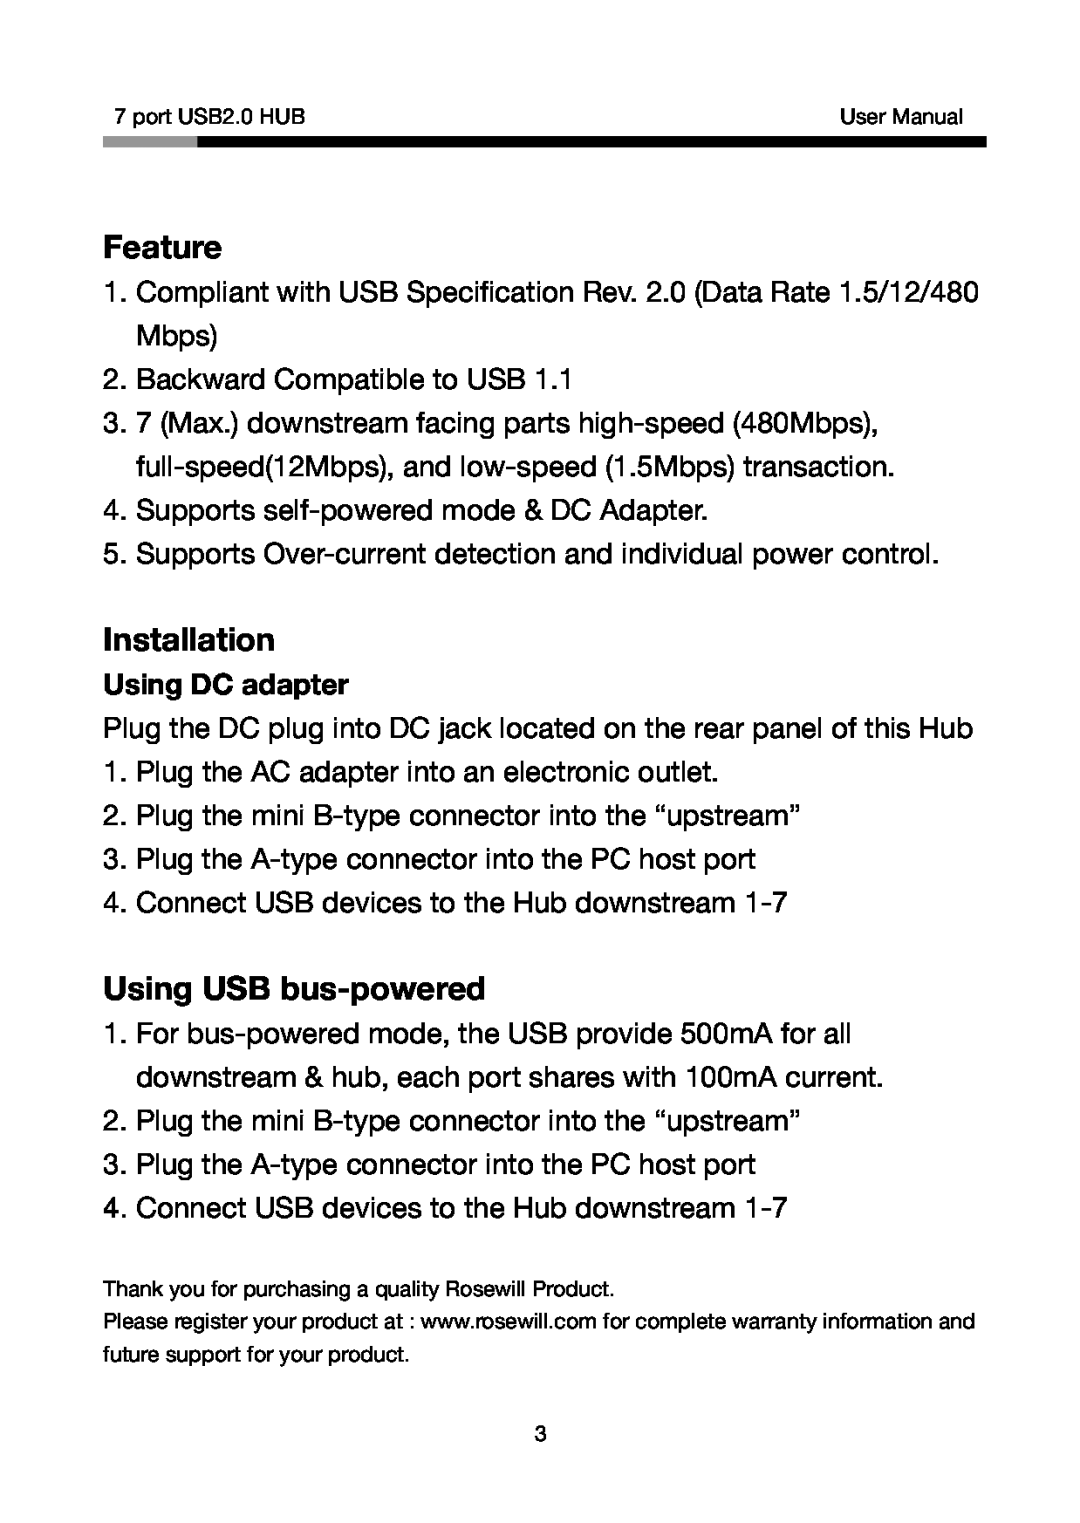 Rosewill RHUB310R, RHUB-310S, RHUB-310B, RHUB310W user manual Feature, Installation, Using USB bus-powered, Using DC adapter 